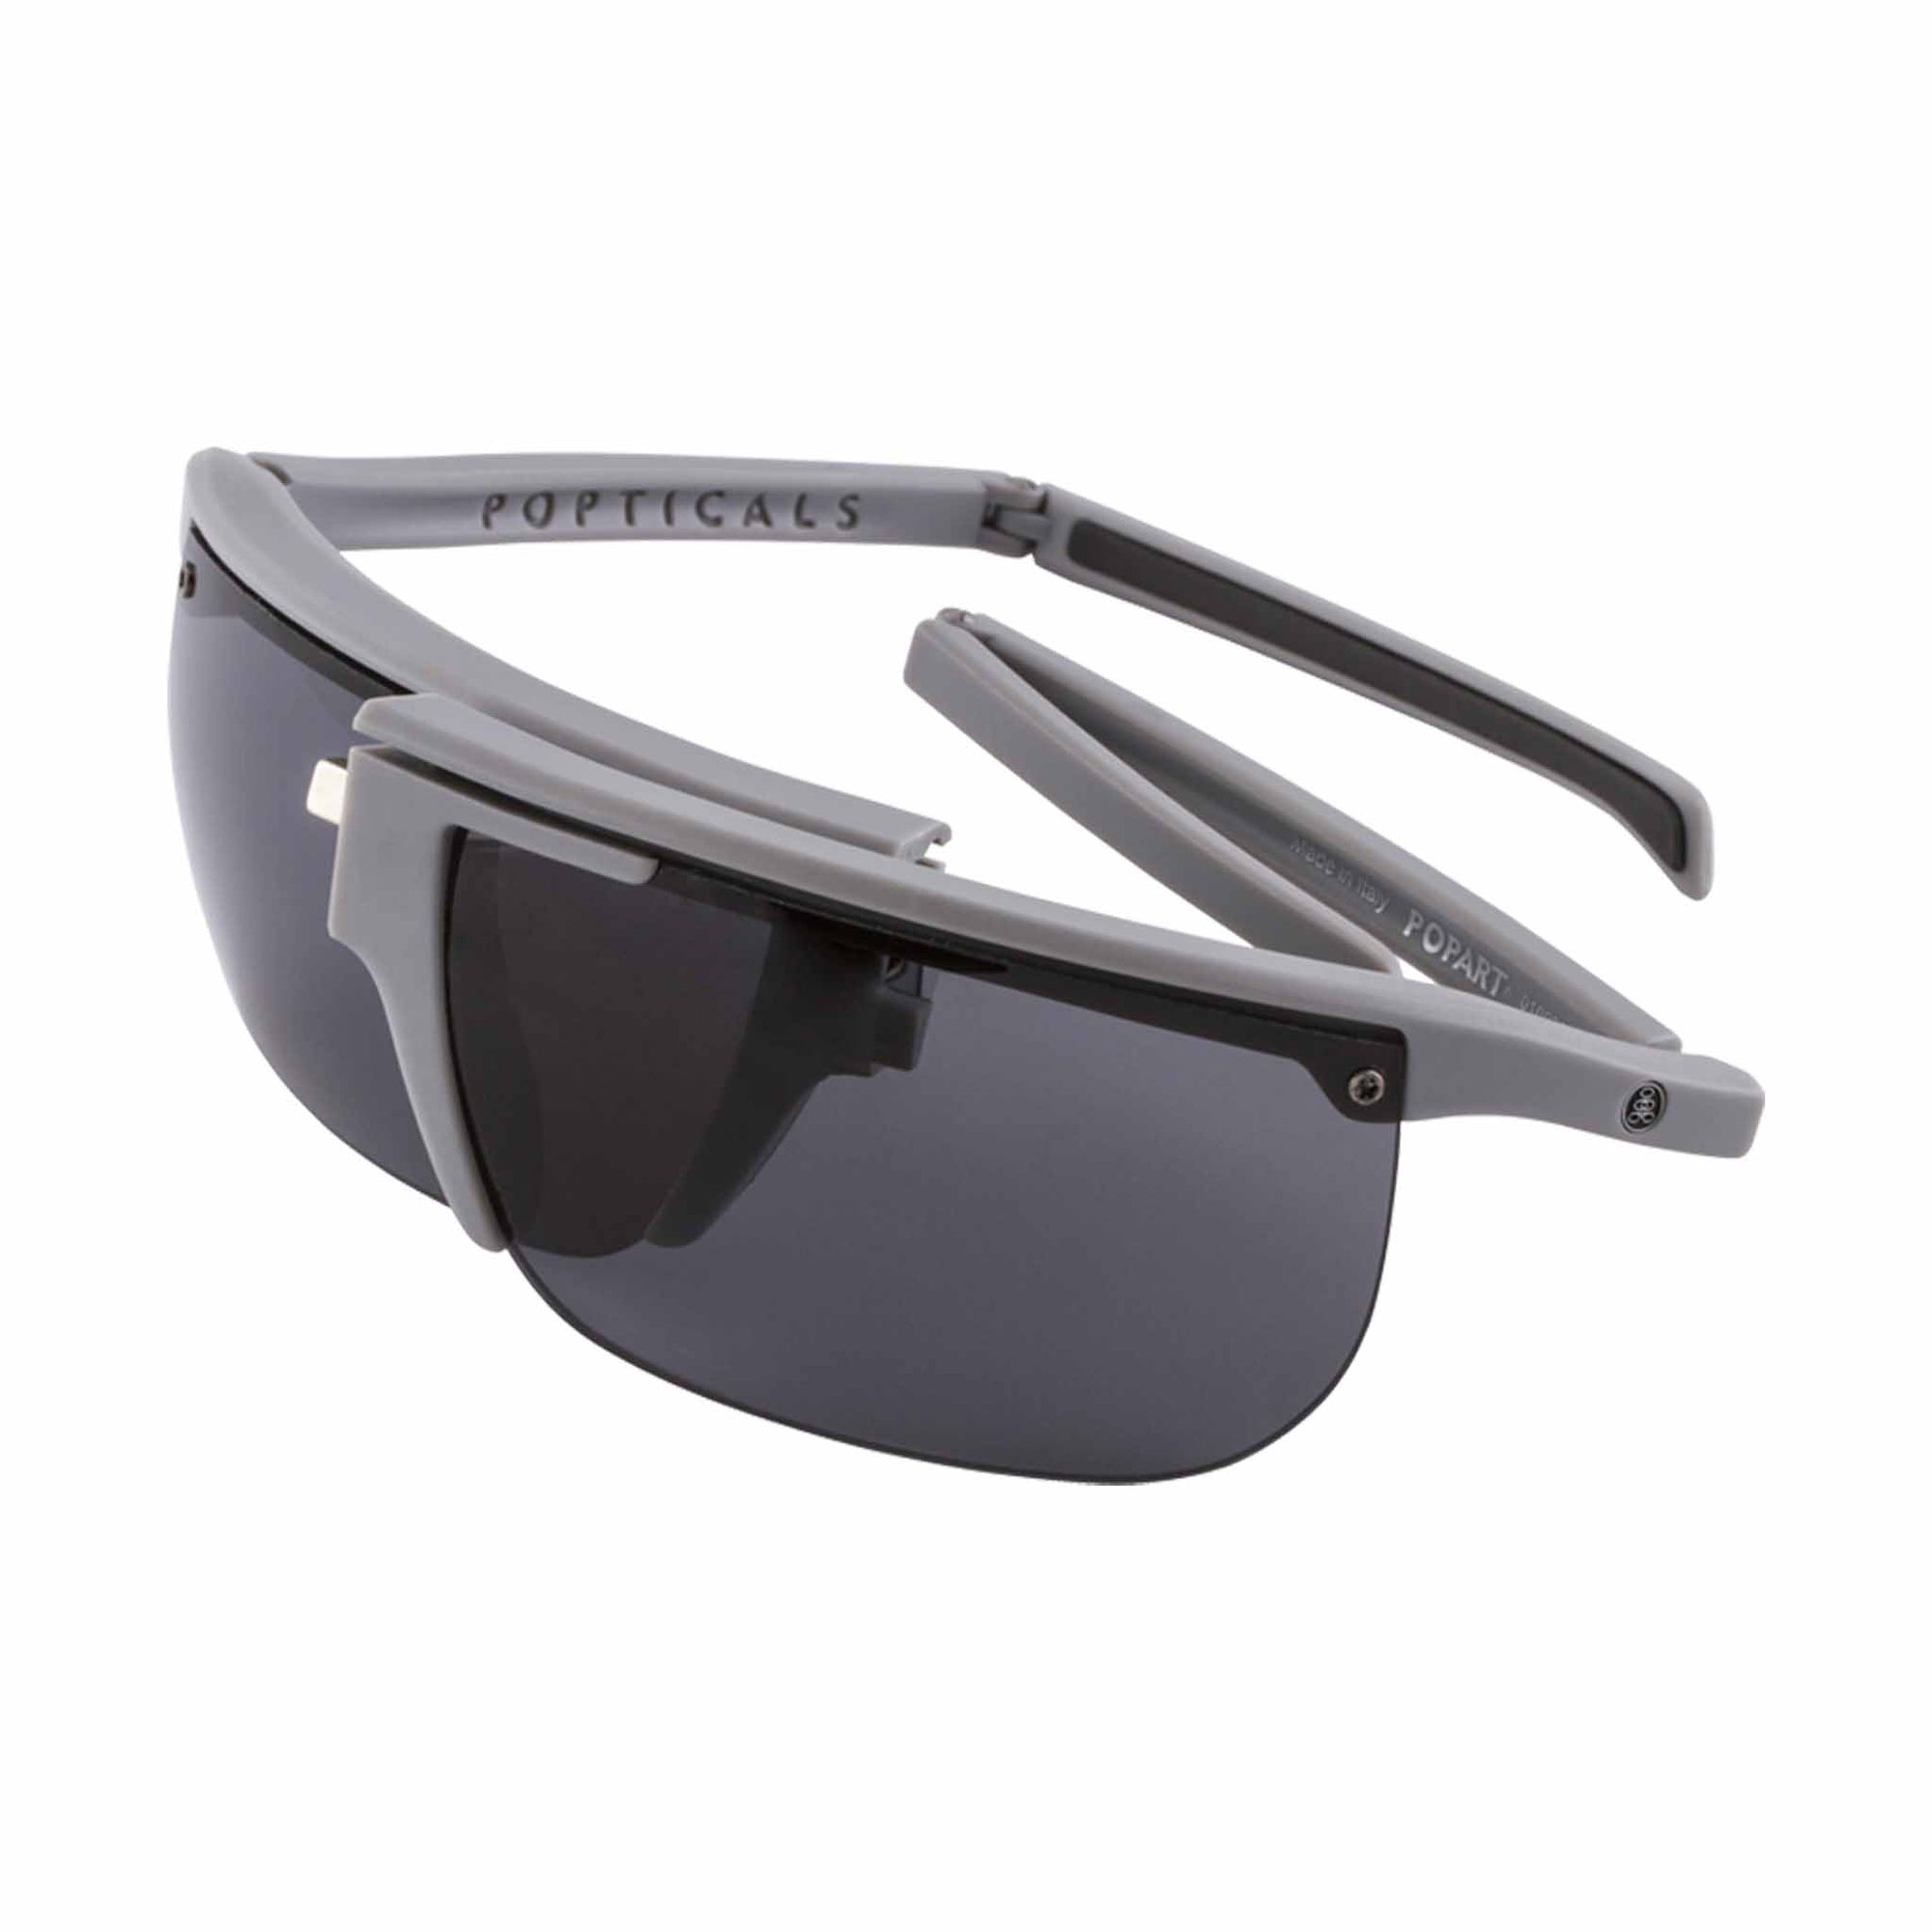 Popticals, Premium Compact Sunglasses, PopArt, 010030-GMGP, Polarized Sunglasses, Matte Gray Frame, Gray Lenses, Spider View